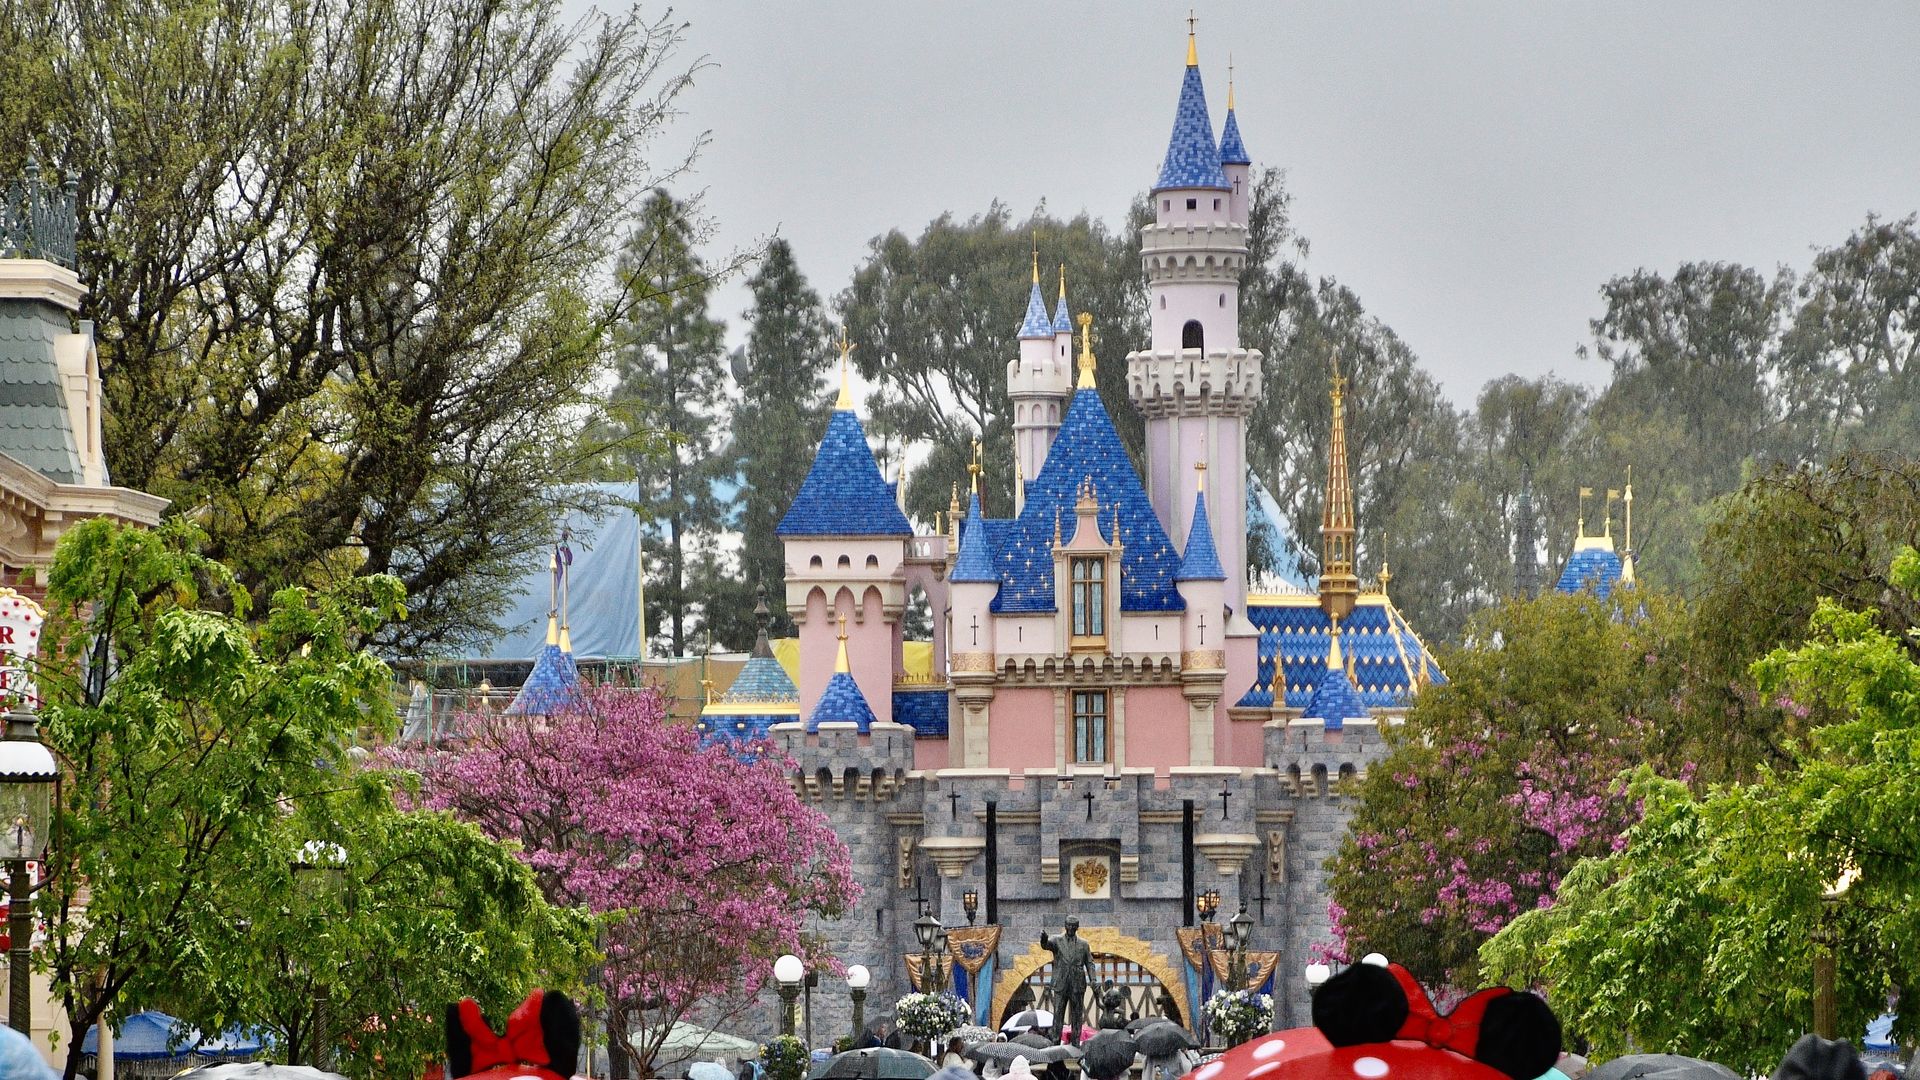 The Disneyland castle in California. 